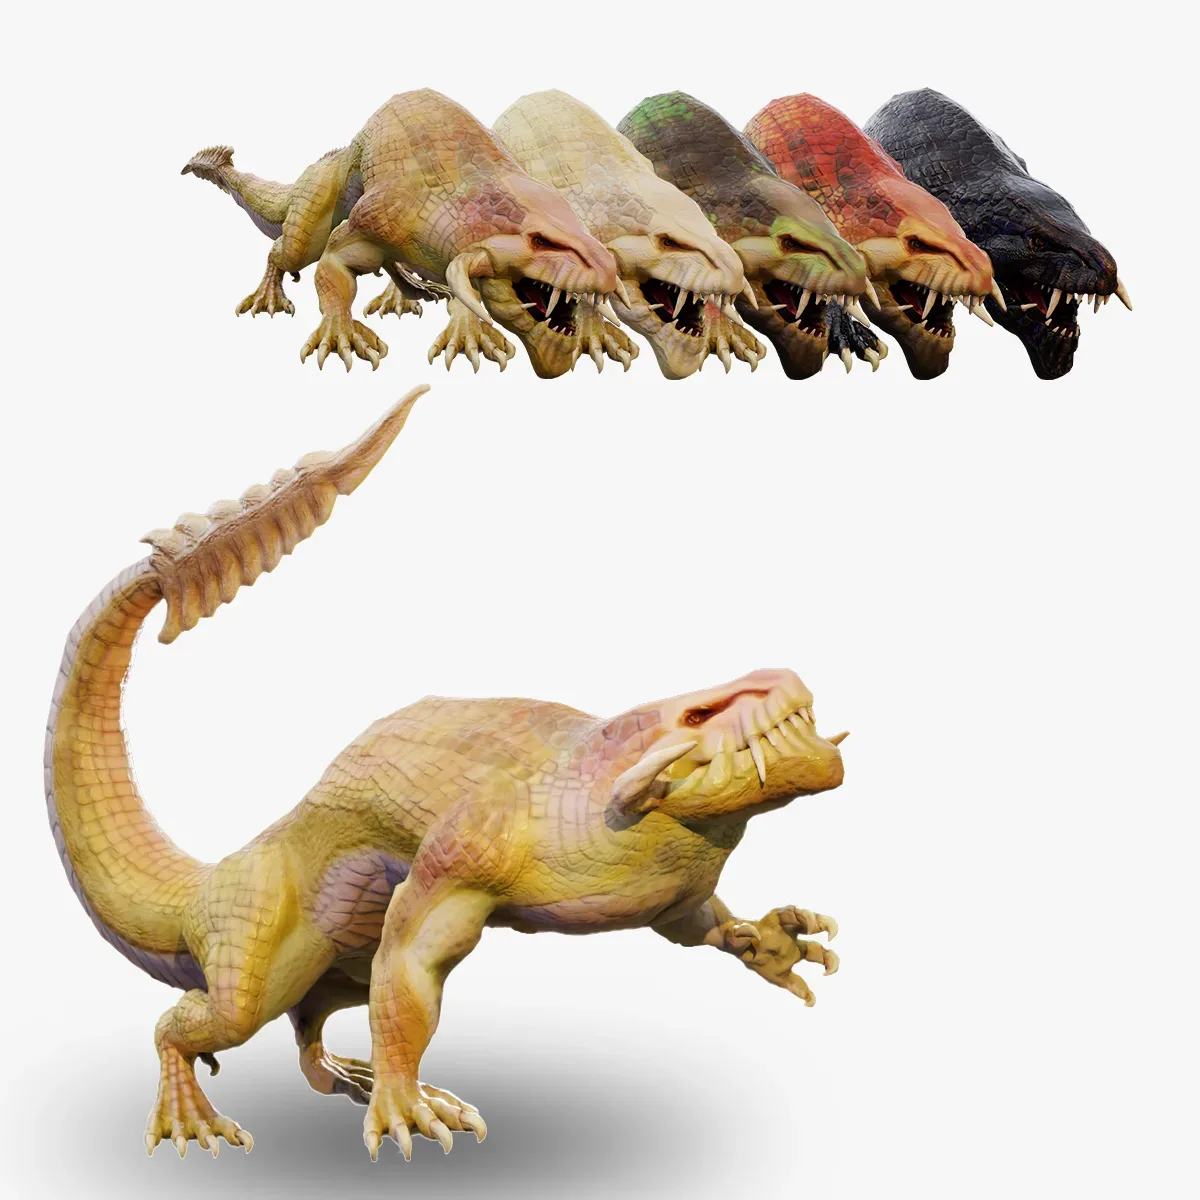 Earth dragon model - reptile monster rigged creature for Blender